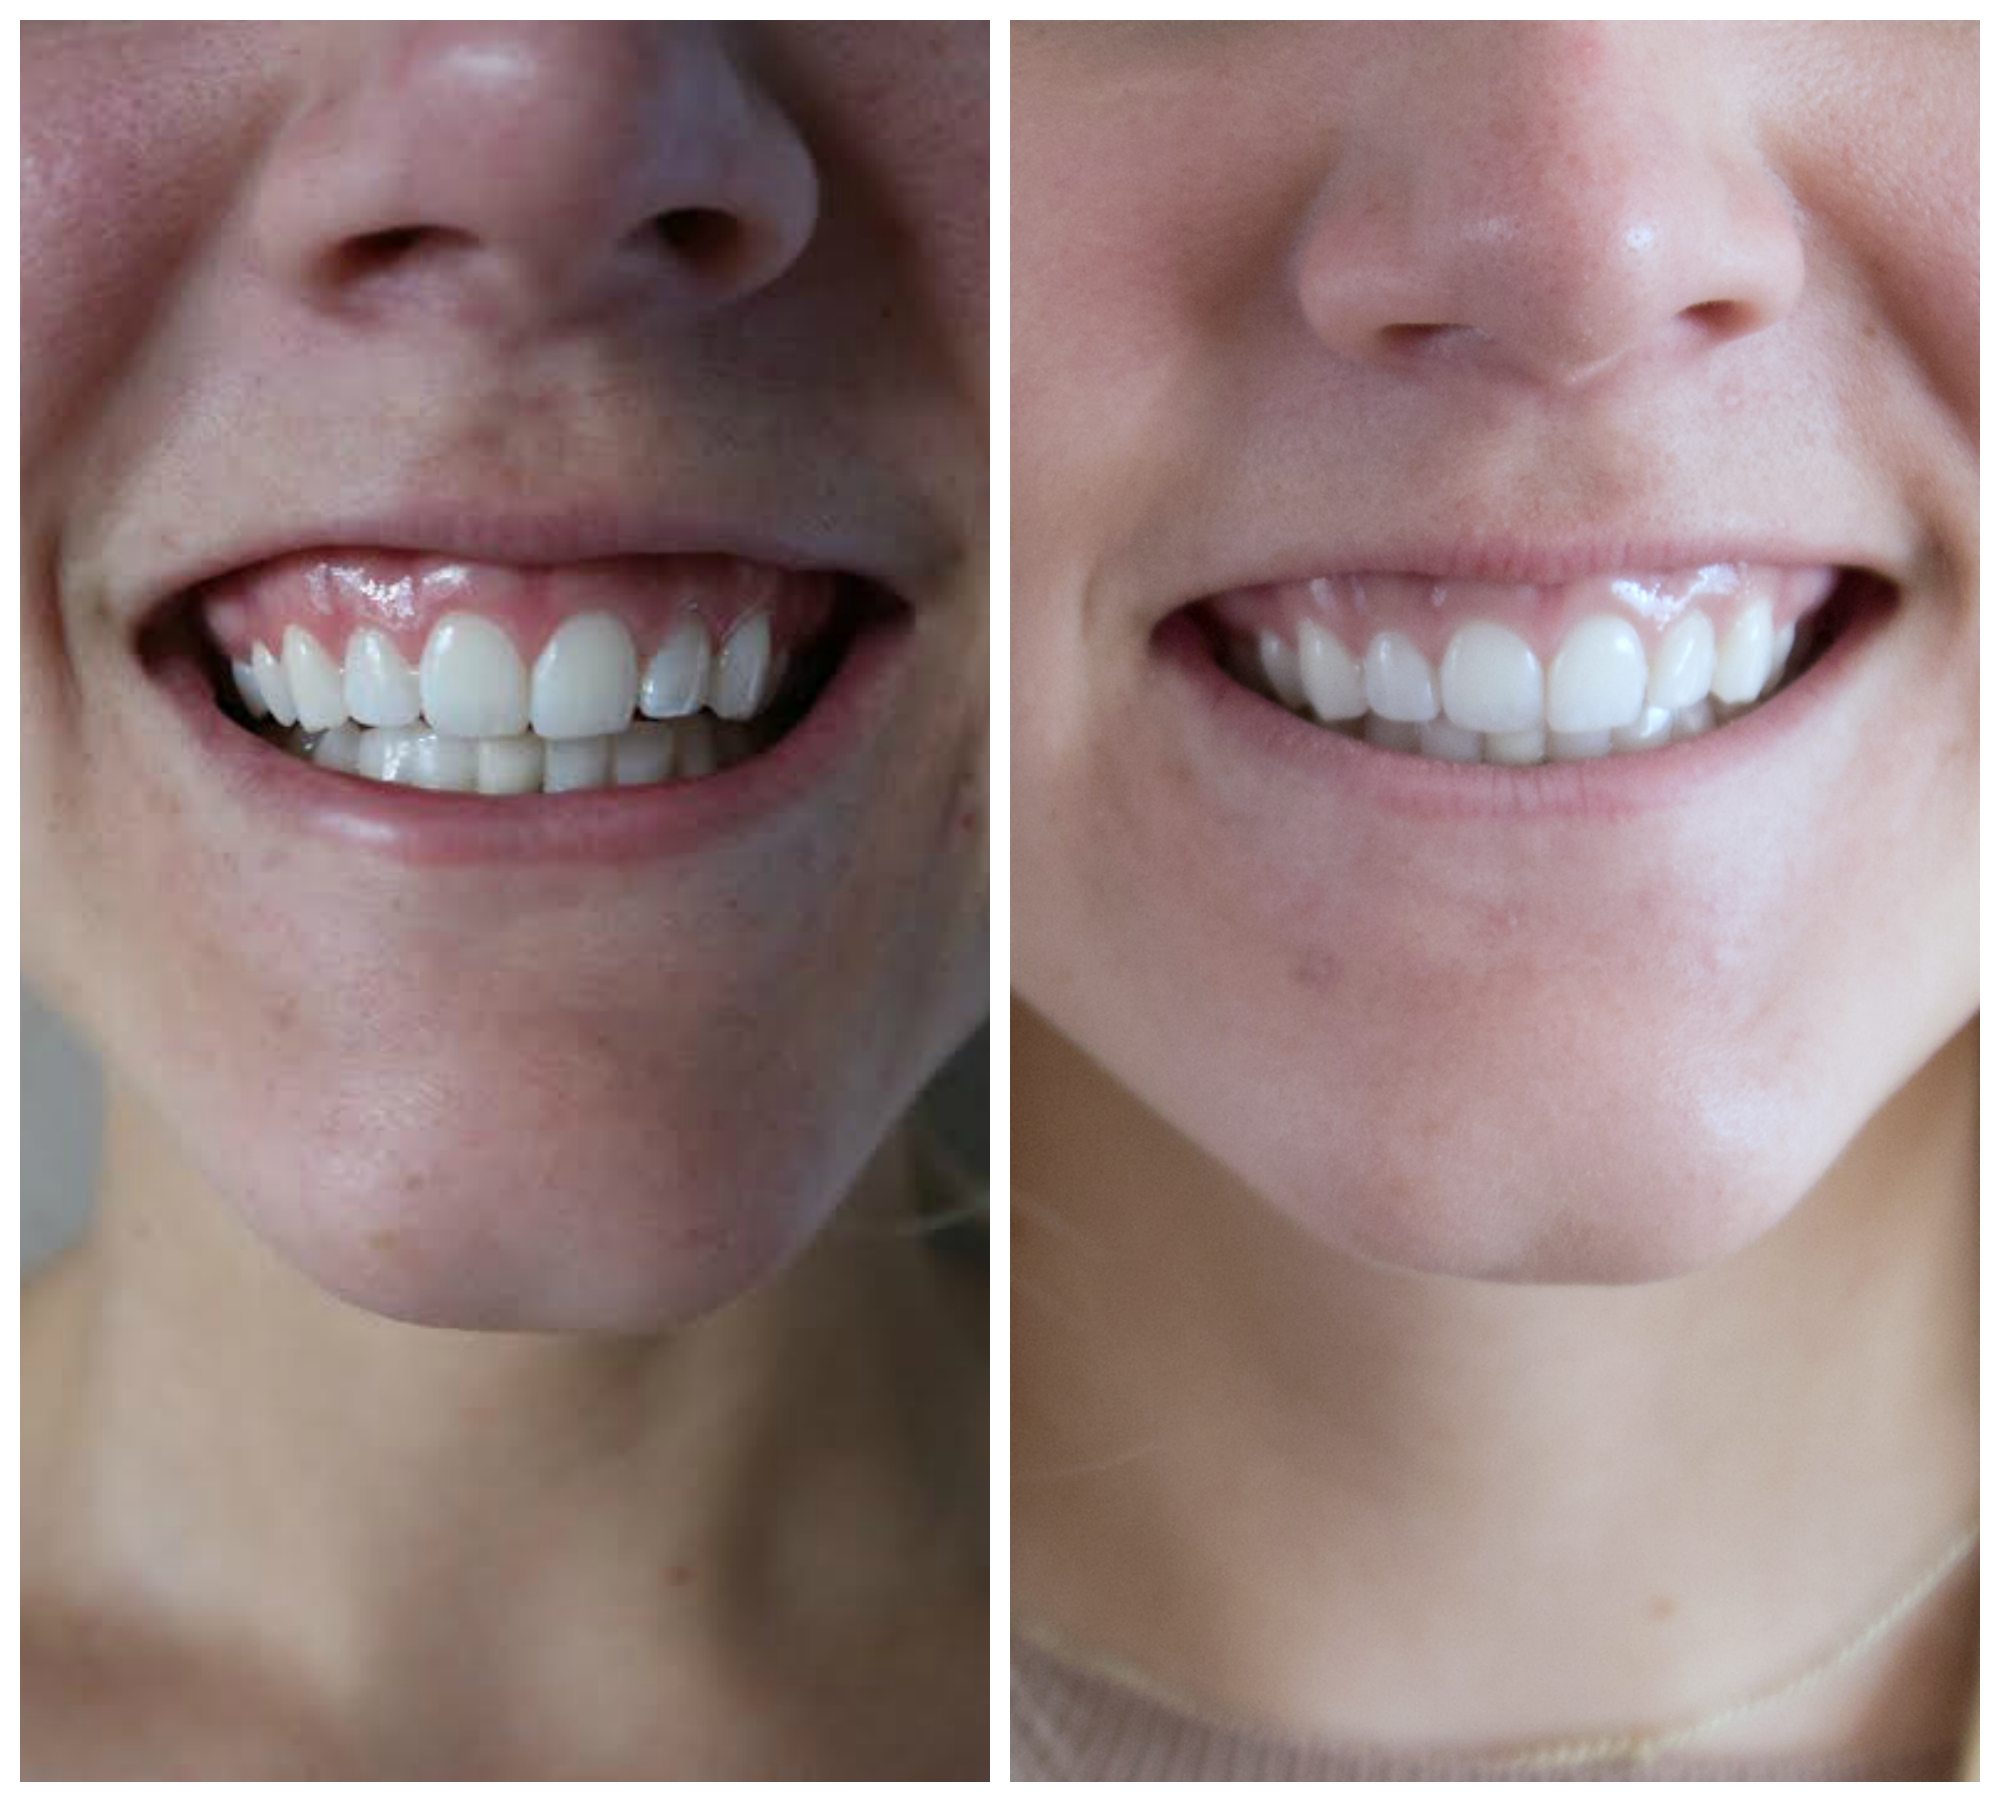 Whitening sensitive teeth at home|| Smile Brilliant